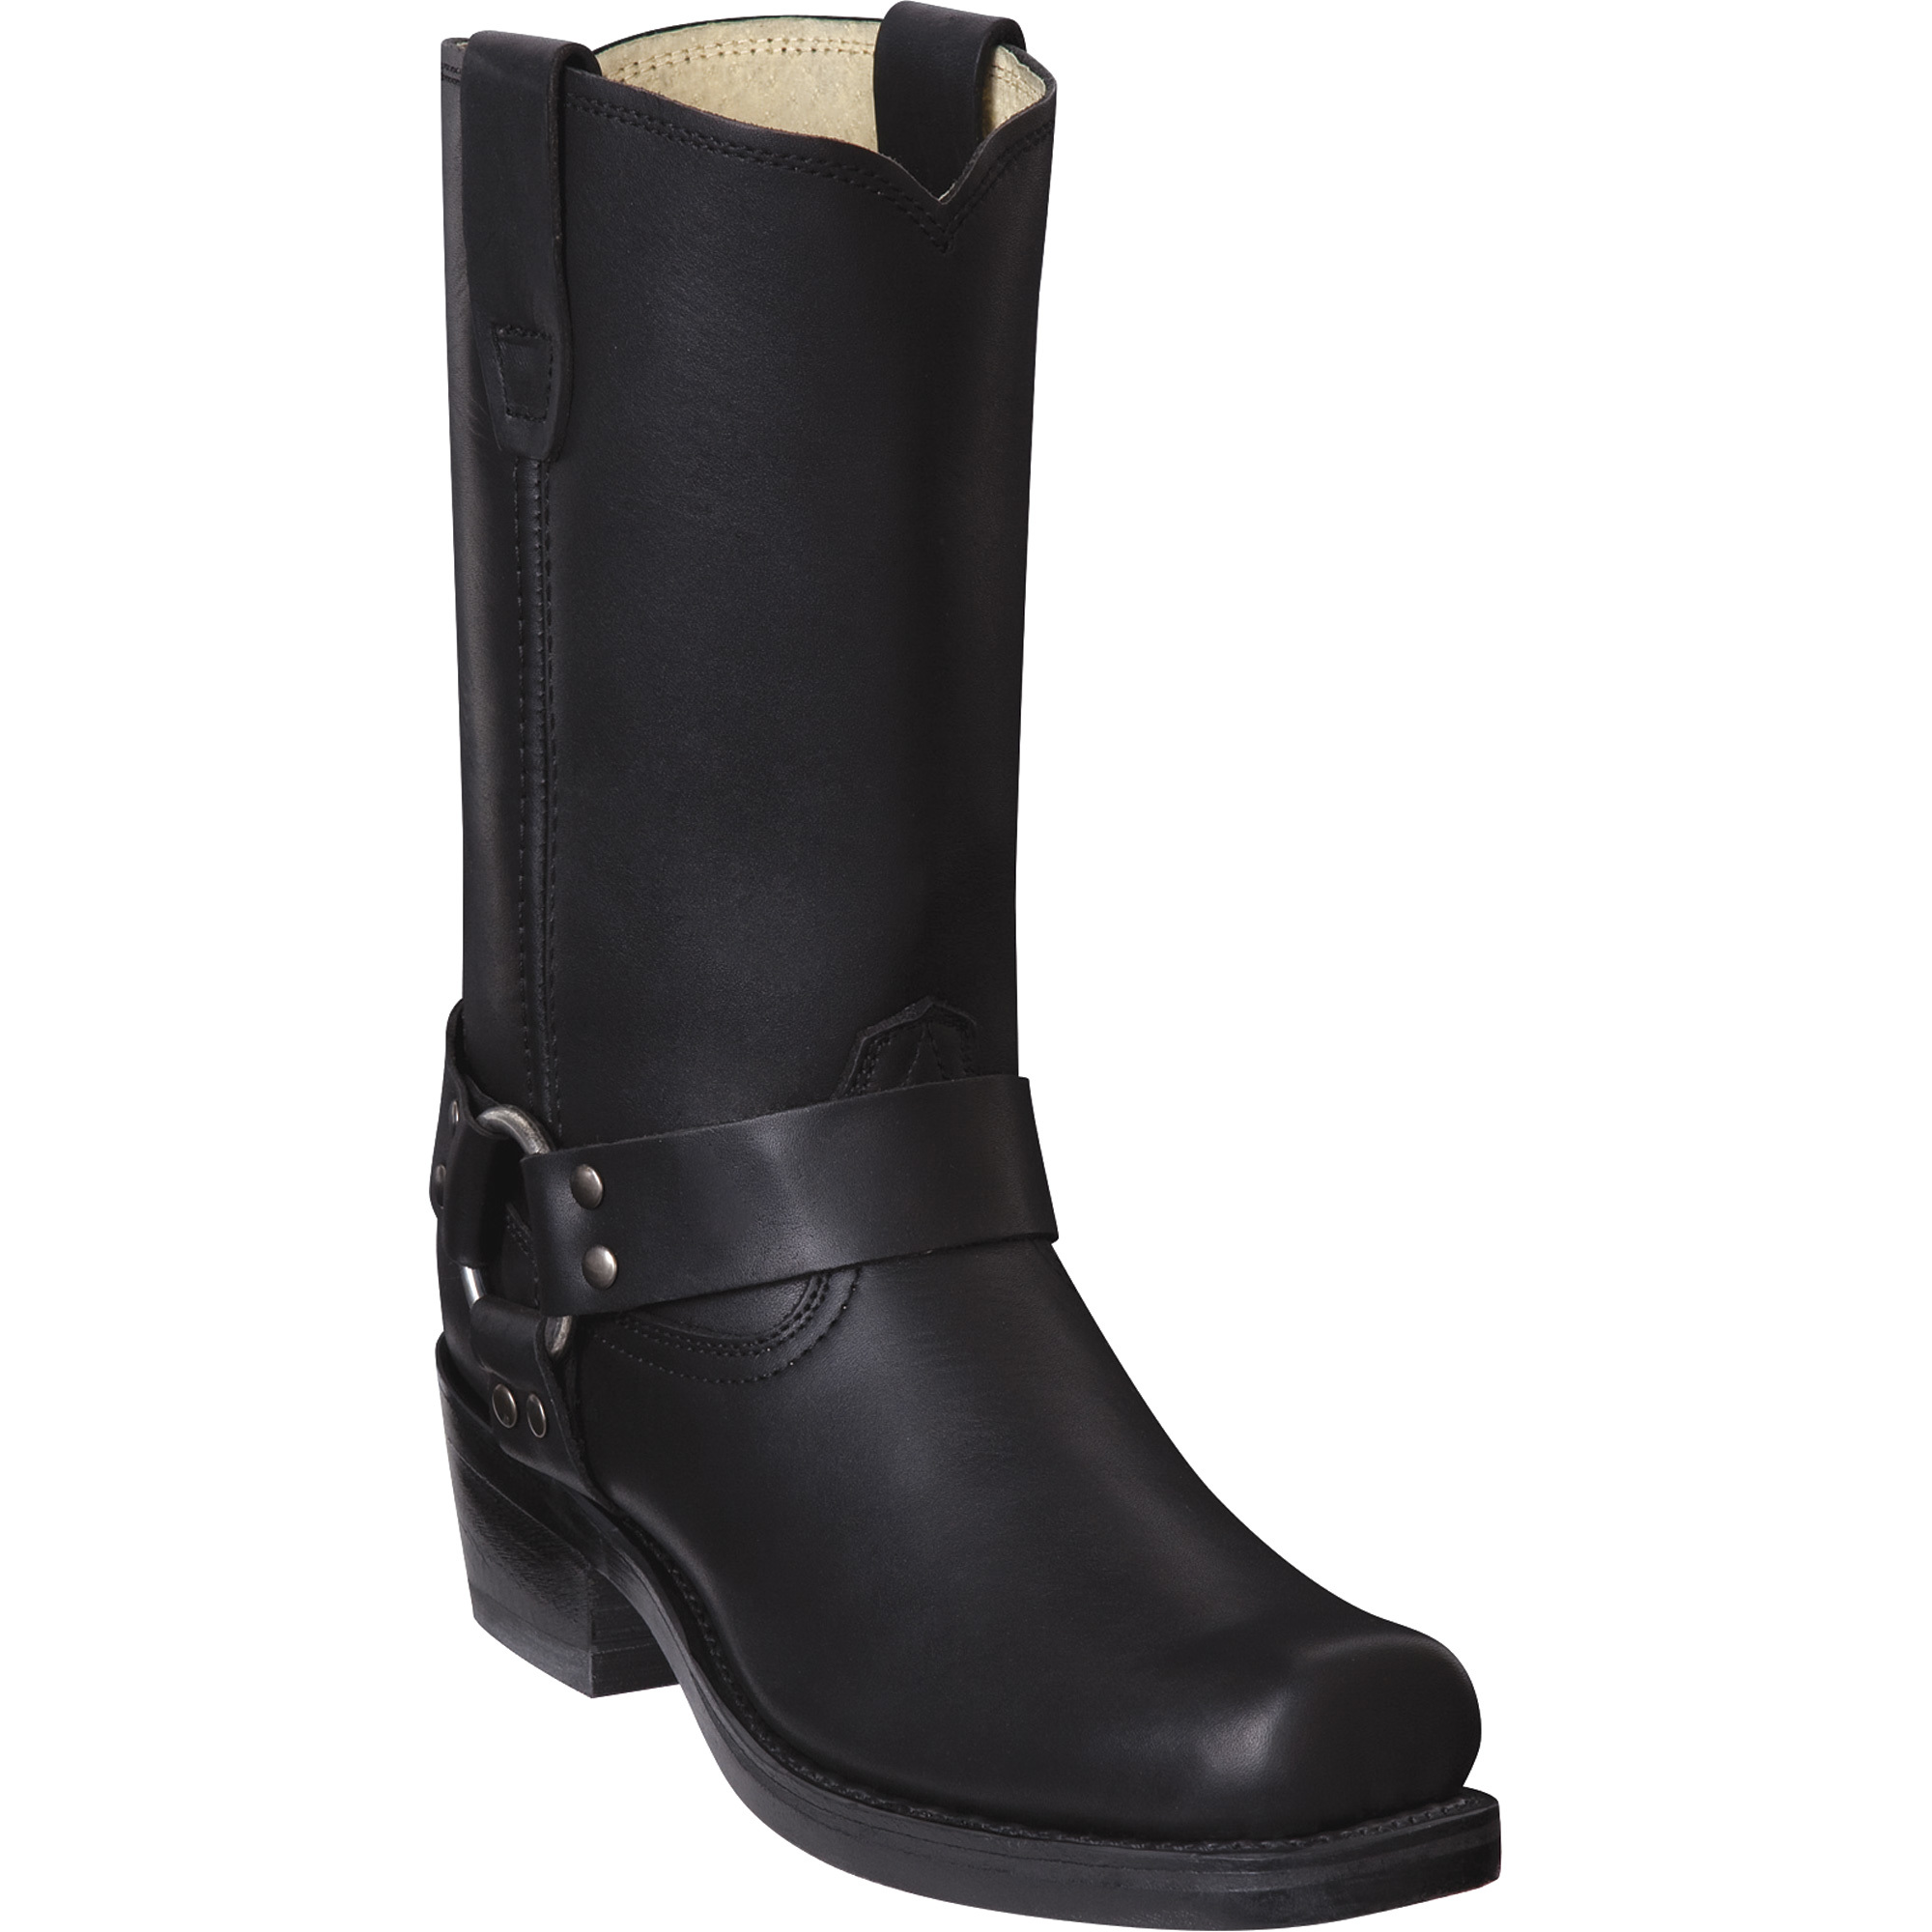 Durango Men's 11Inch Harness Boot - Black, Size 12, Model DB 510